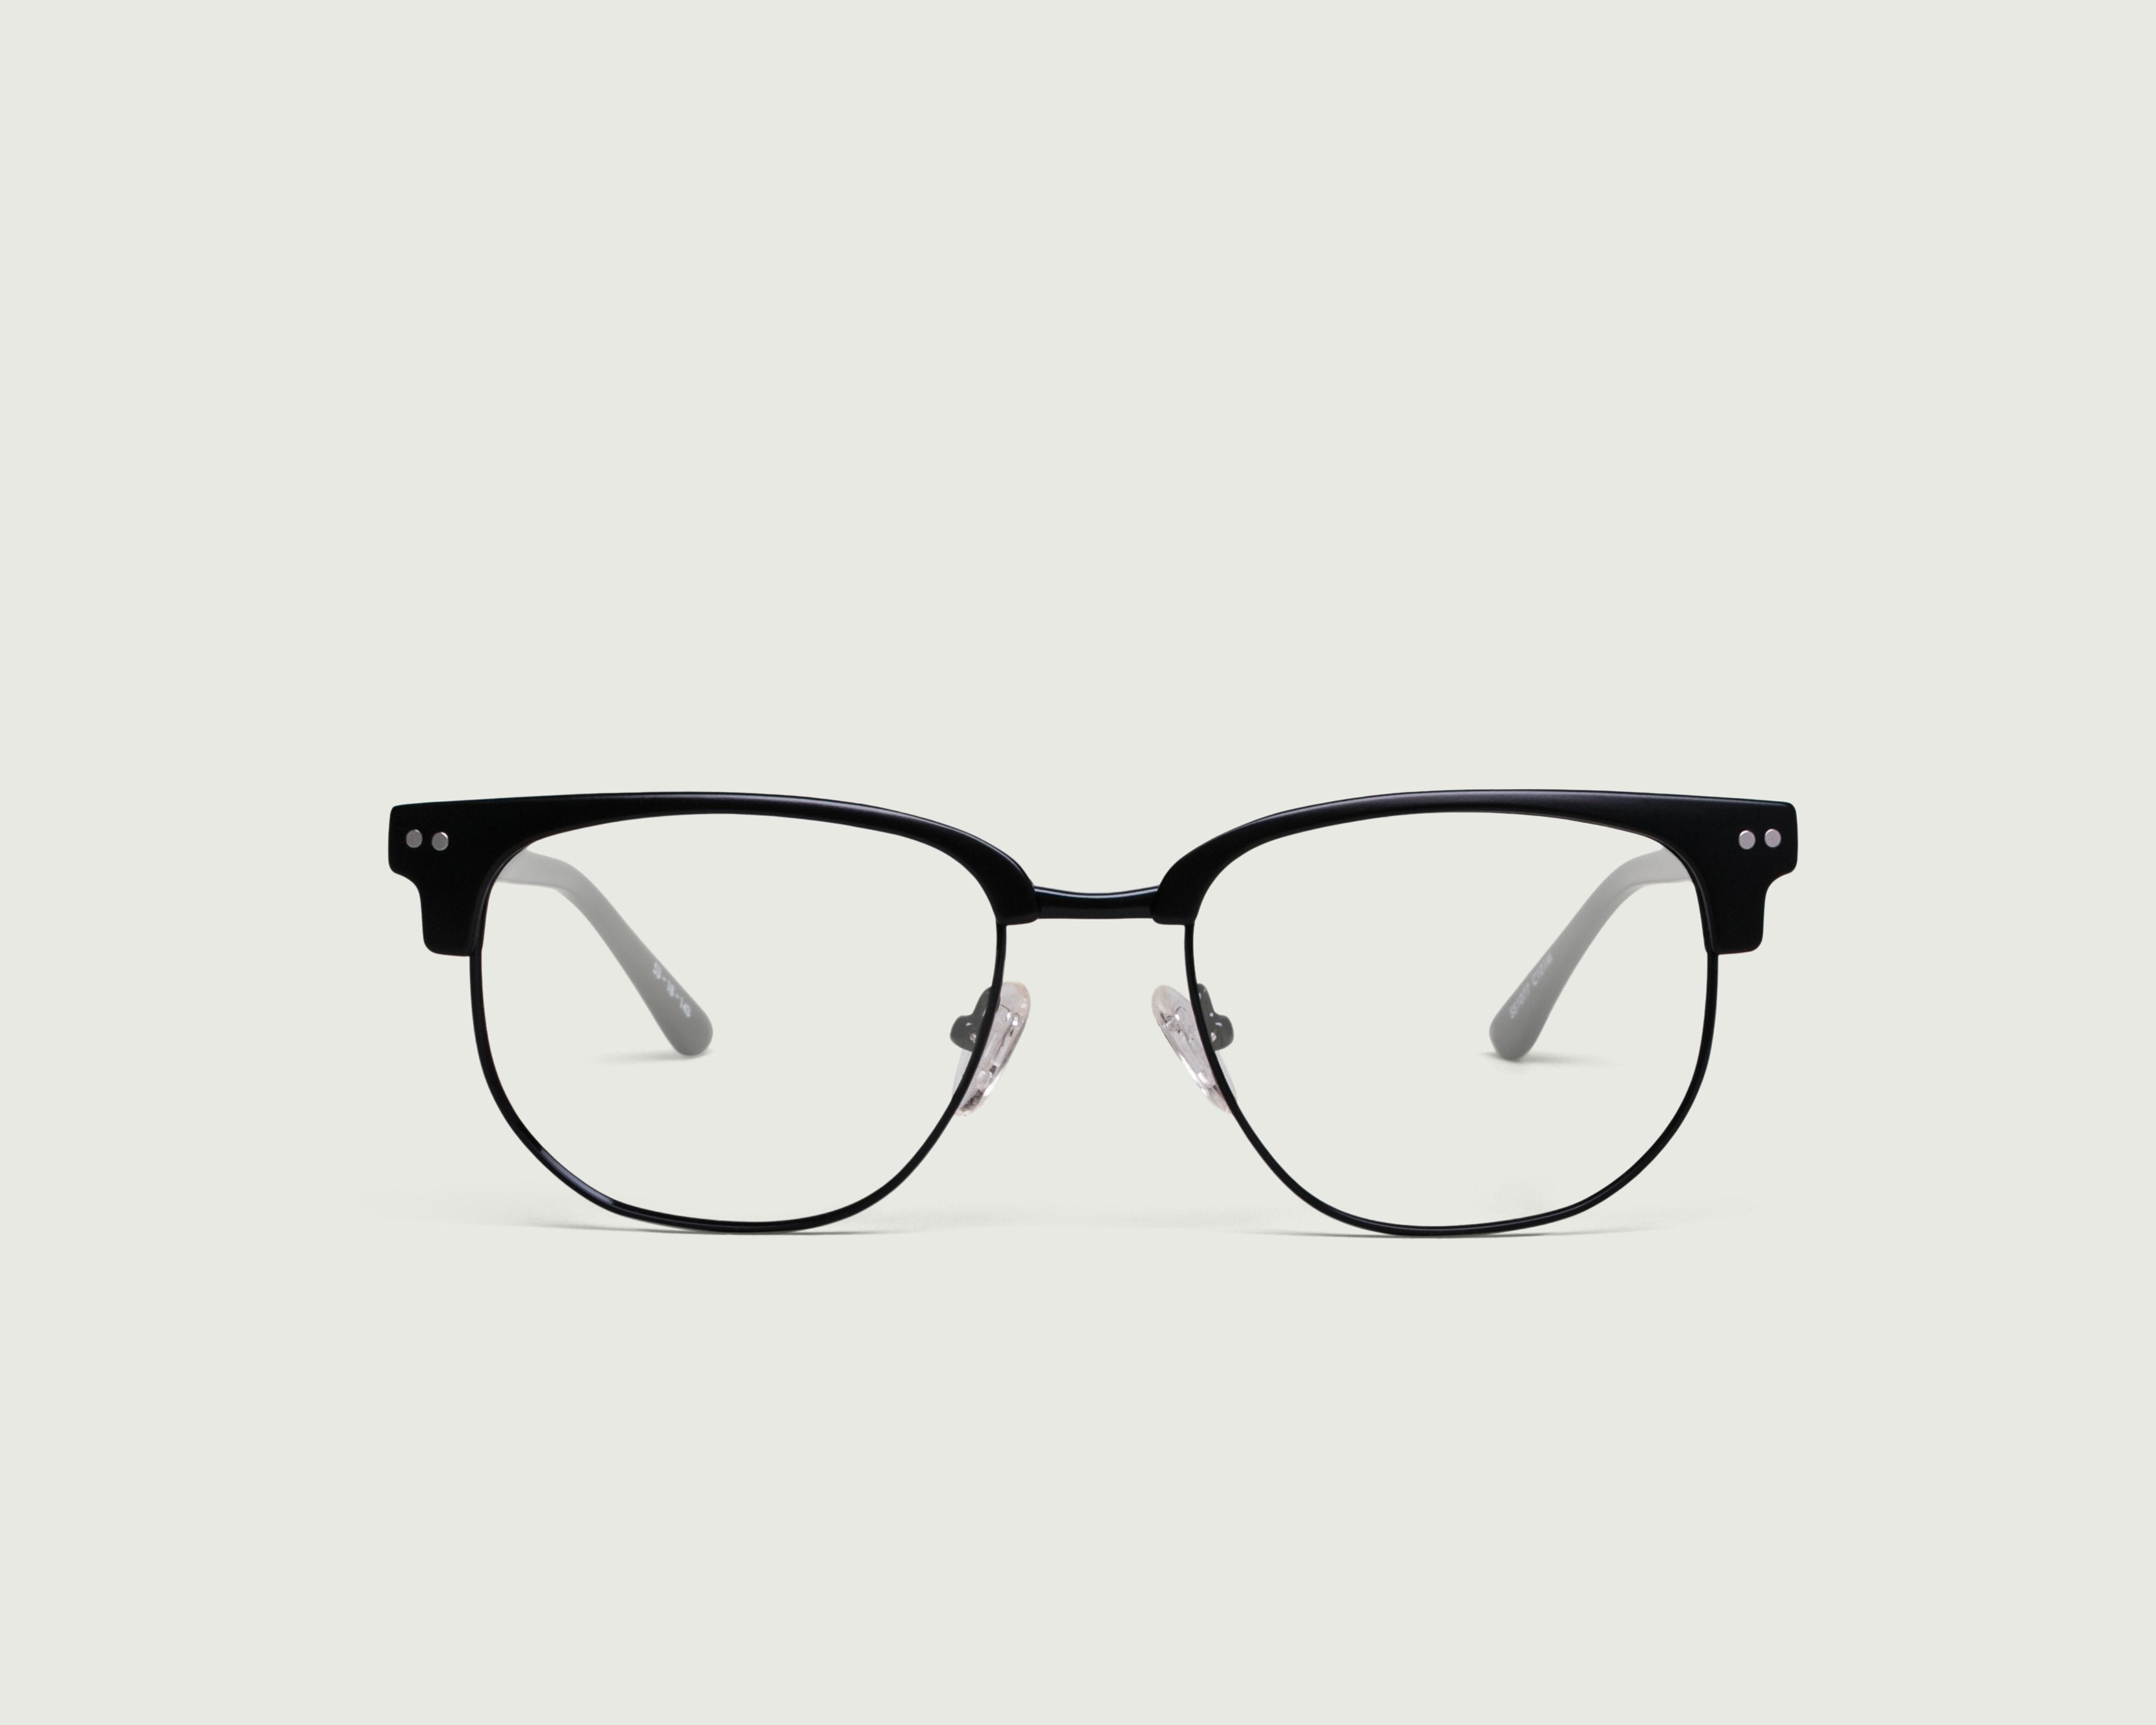 Charcoal::Madison Eyeglasses browline black plastic front